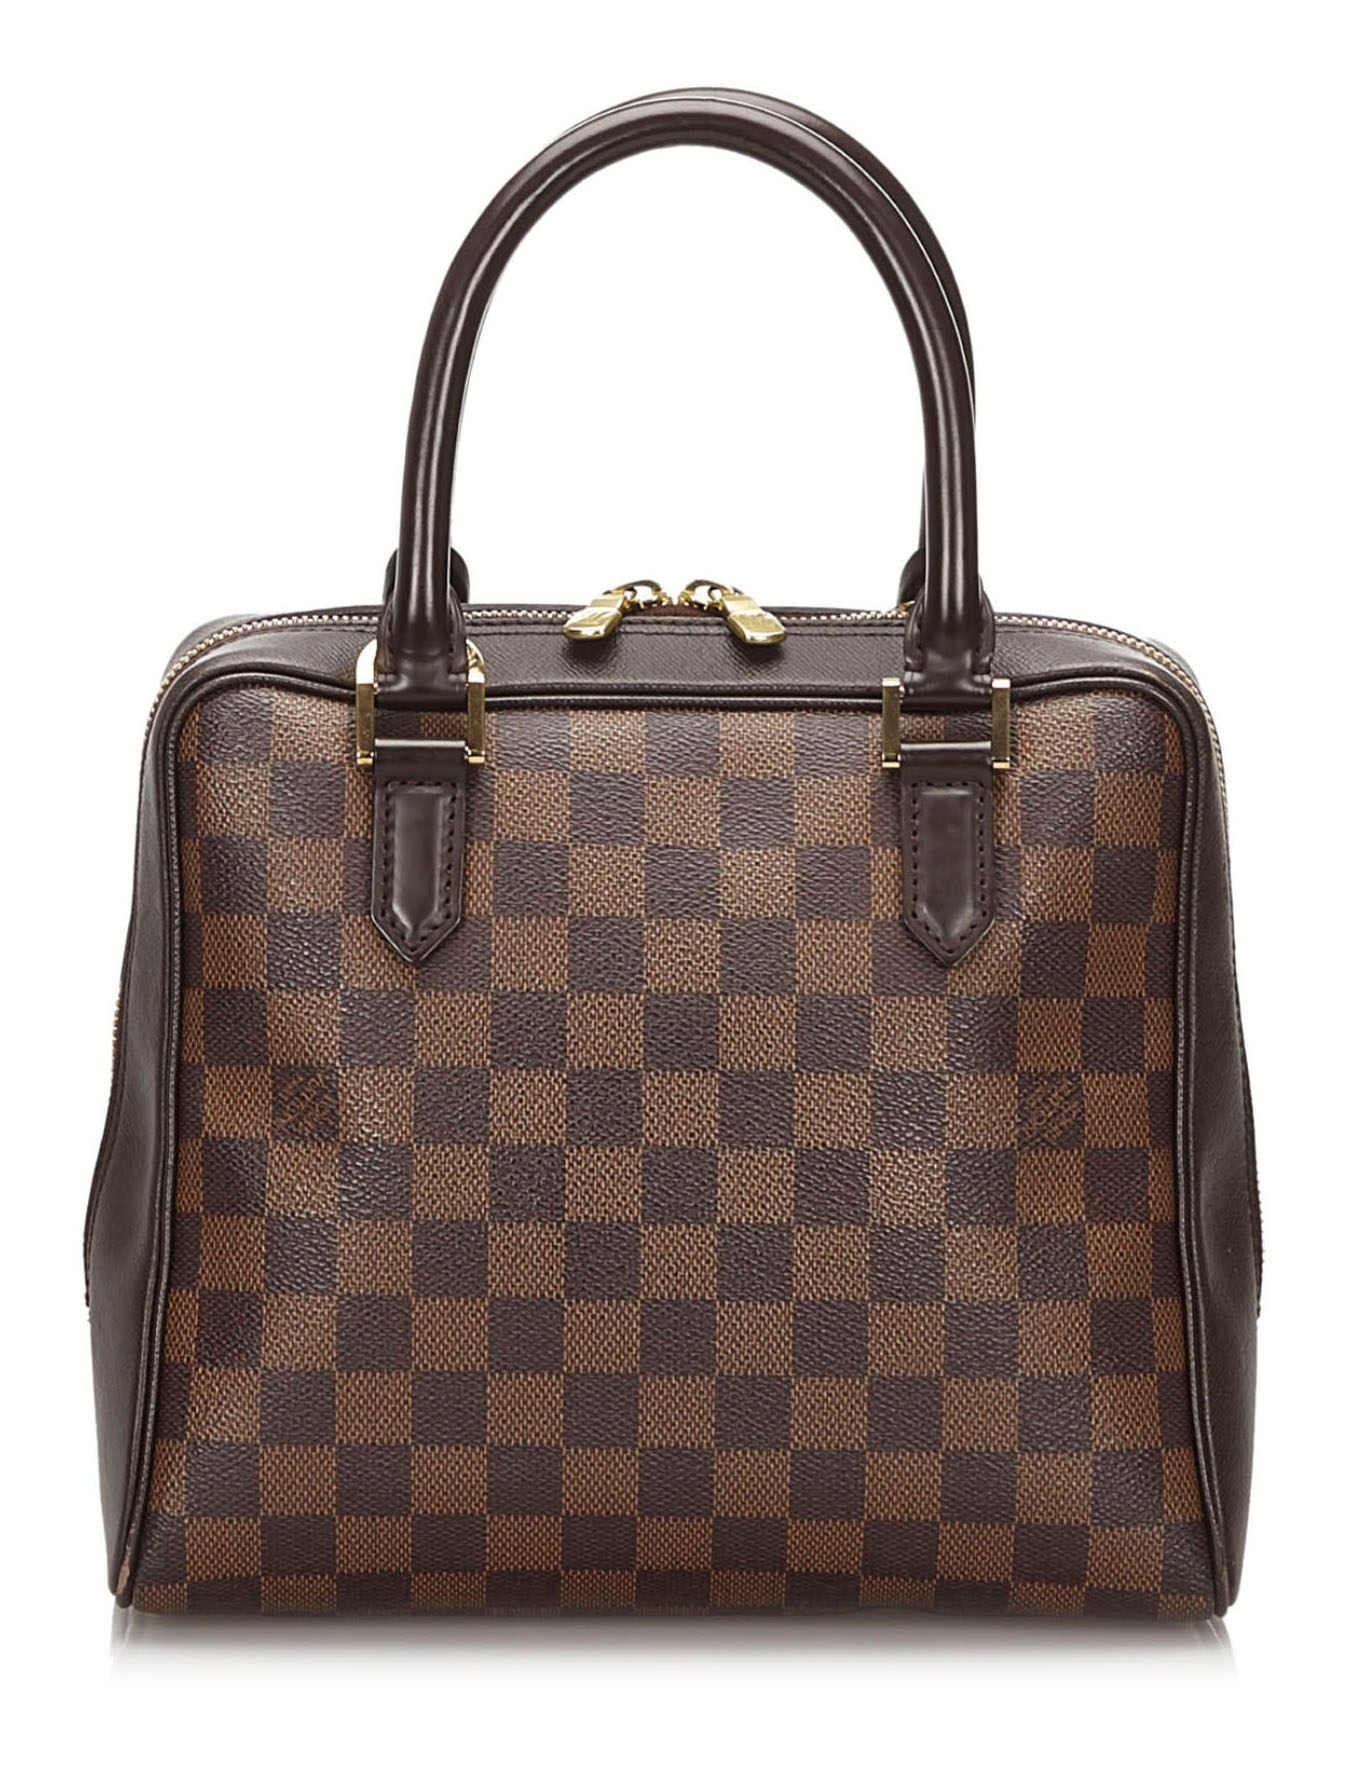 Louis Vuitton Damier Brera Handbag shopRDR Review 